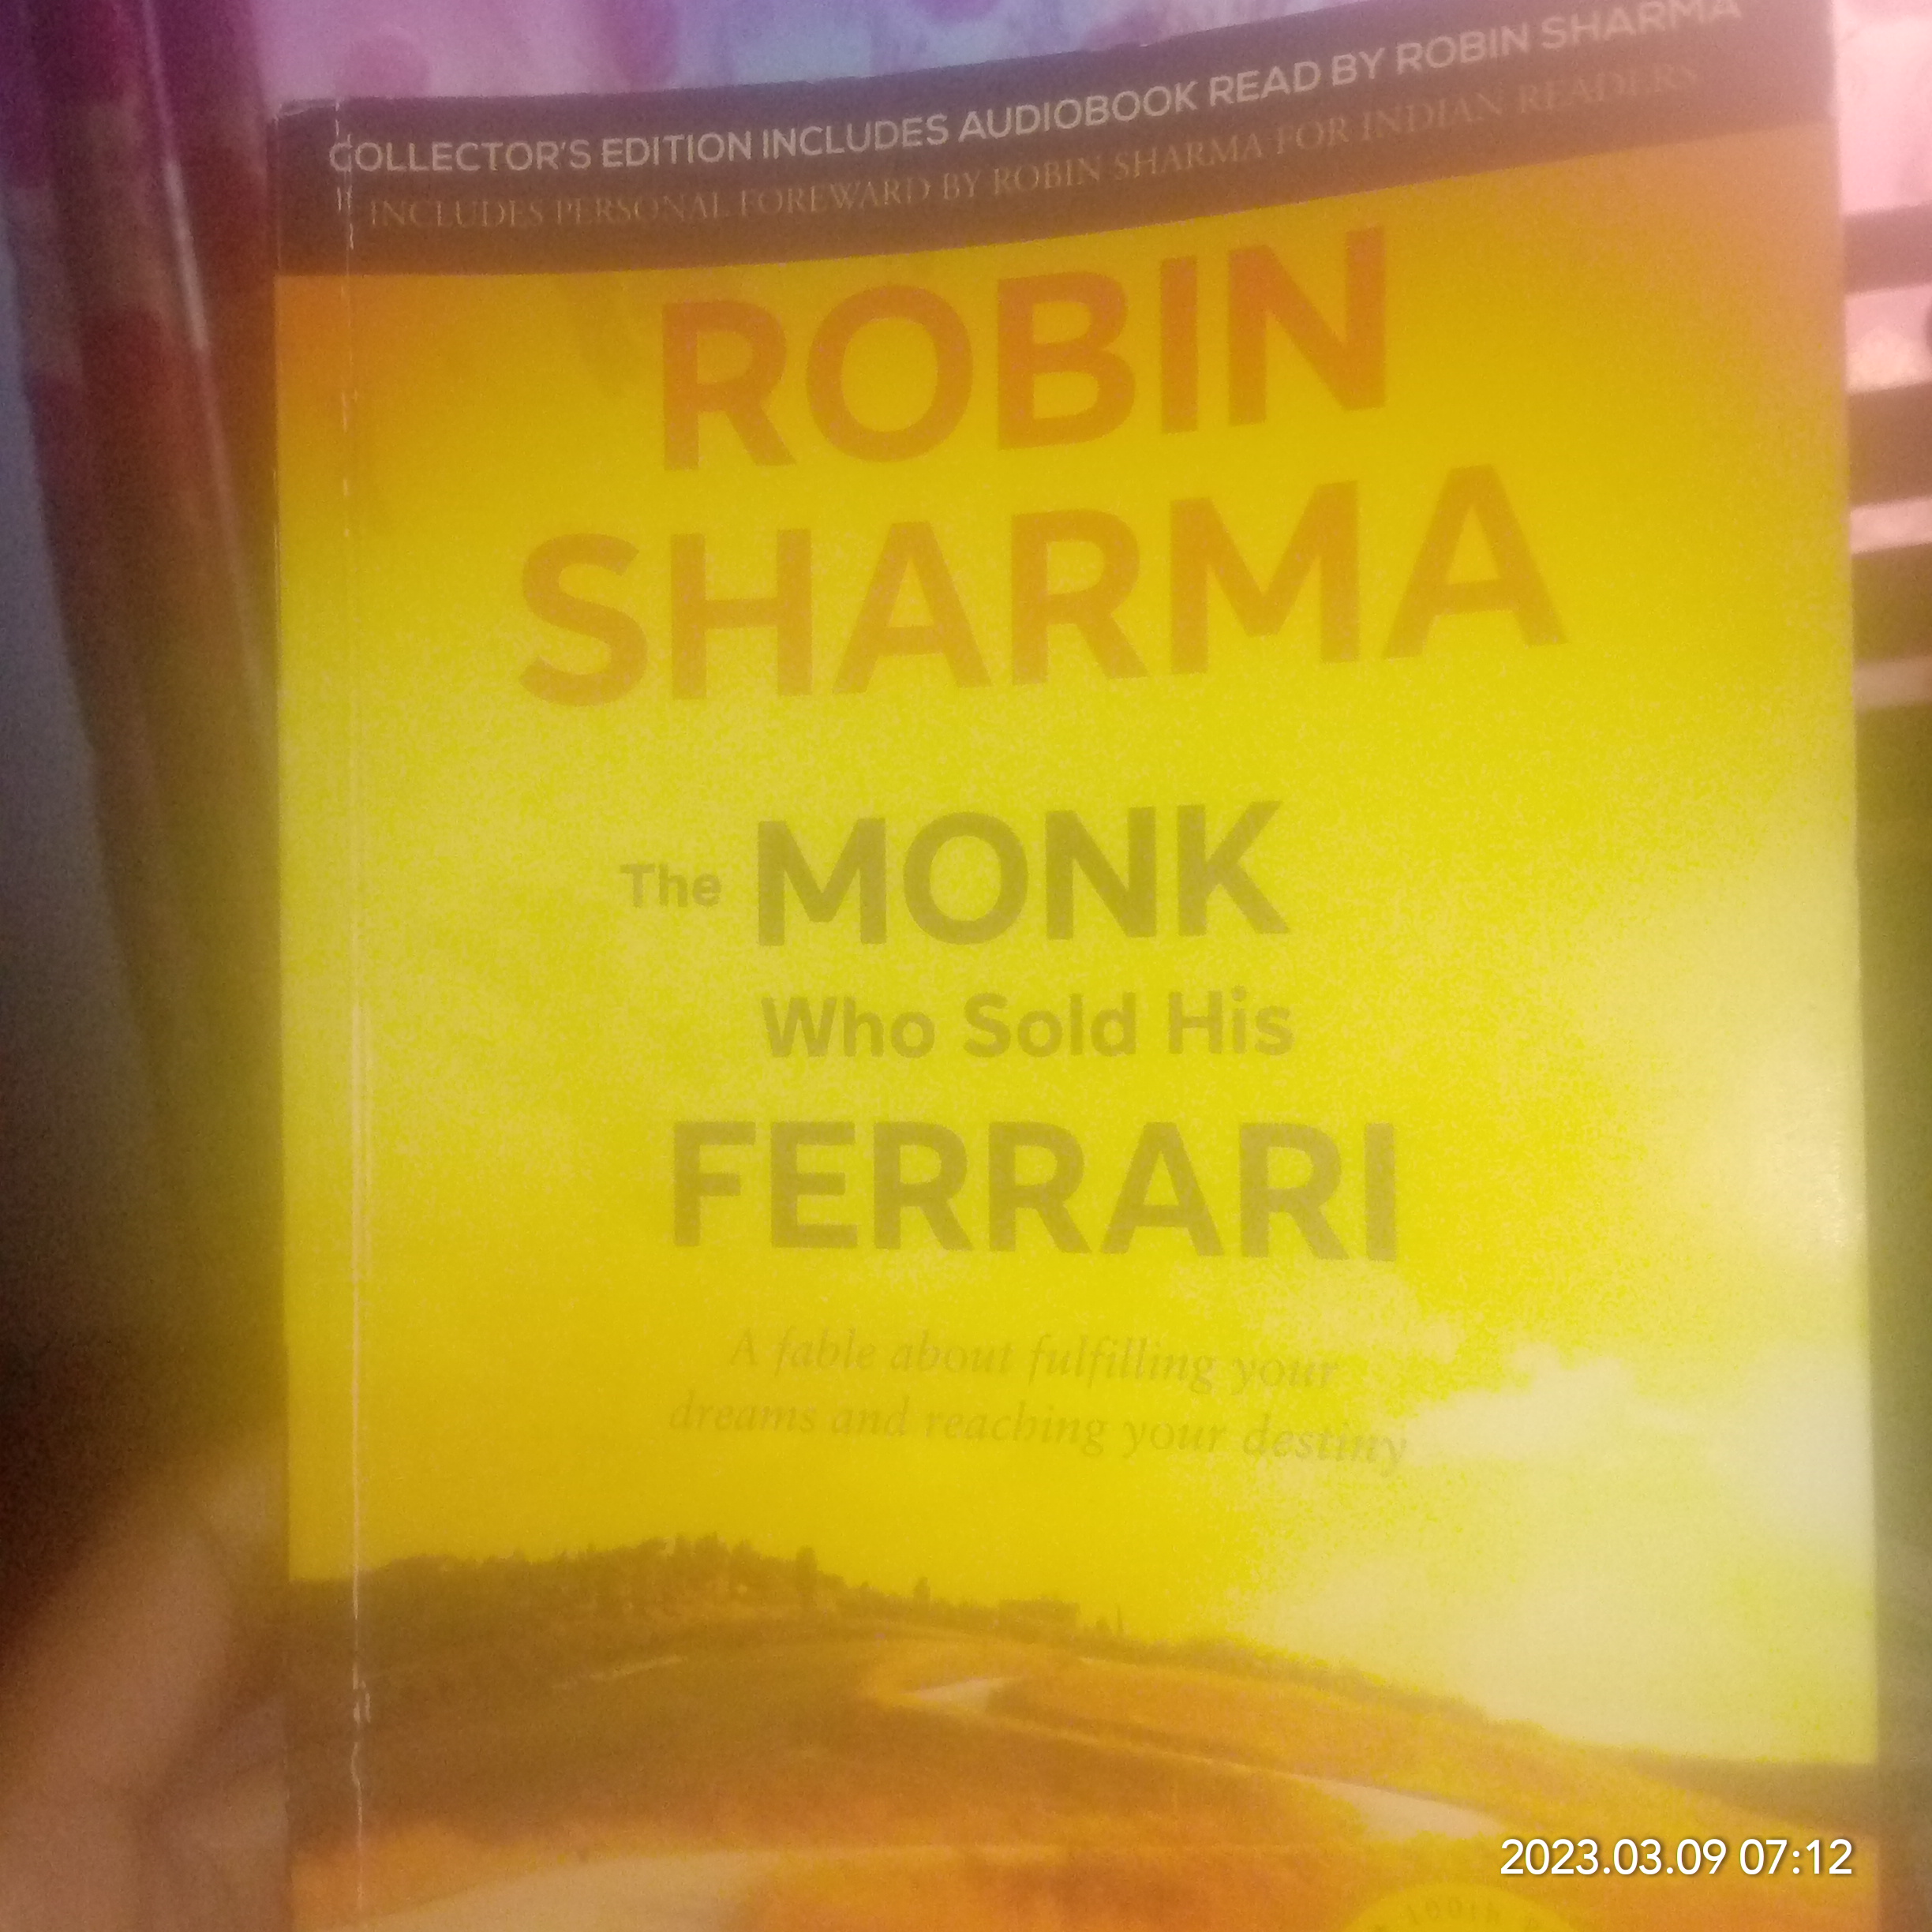 the monk who sold his ferari